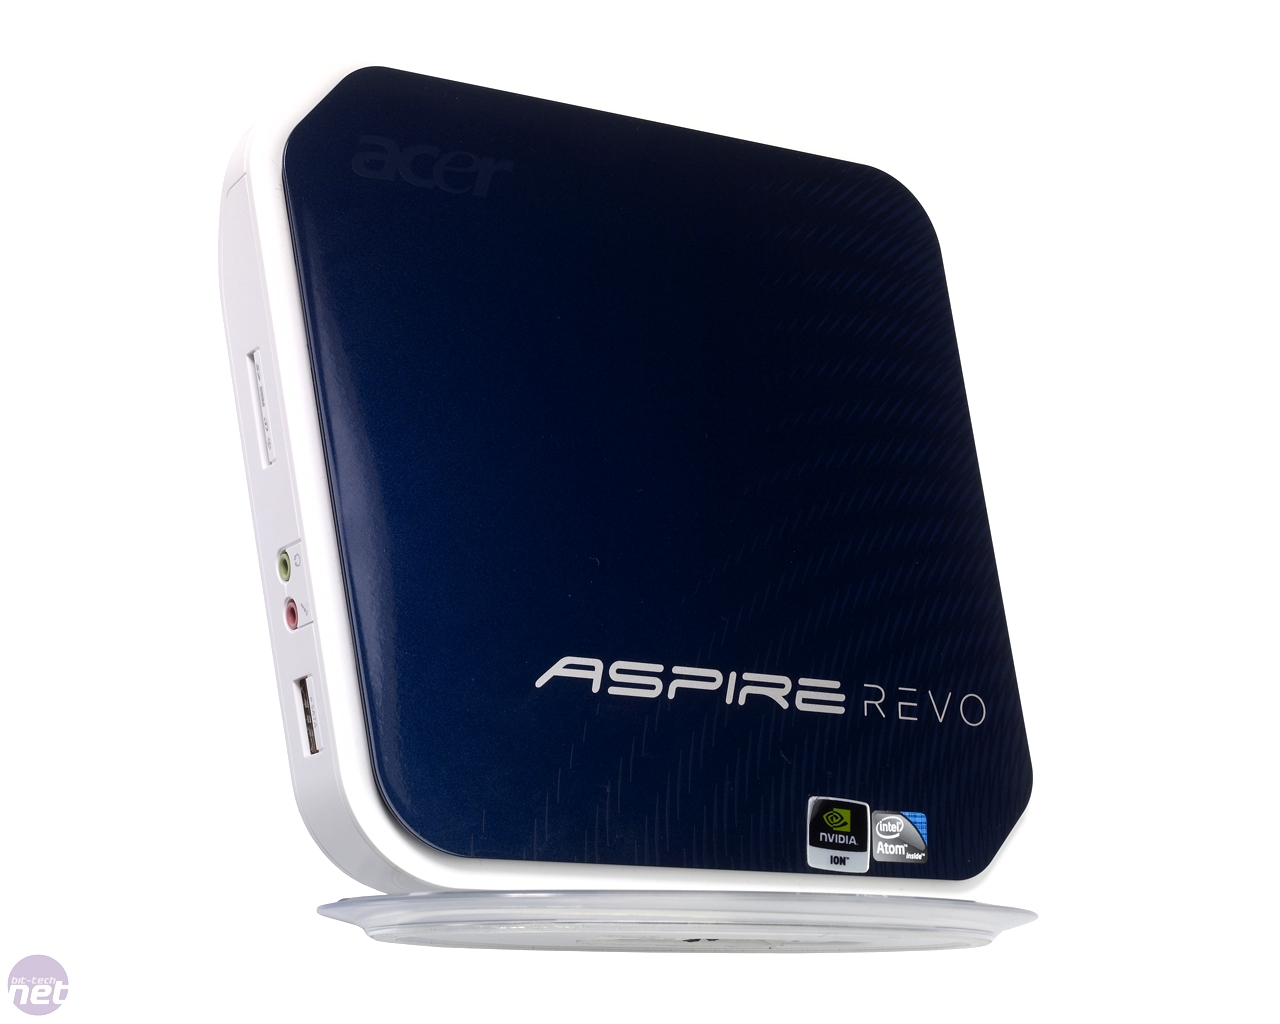 Acer Aspire 3700 Revo. Acer Aspire r3600. Acer Aspire Revo r3600. Acer Aspire Revo 10.